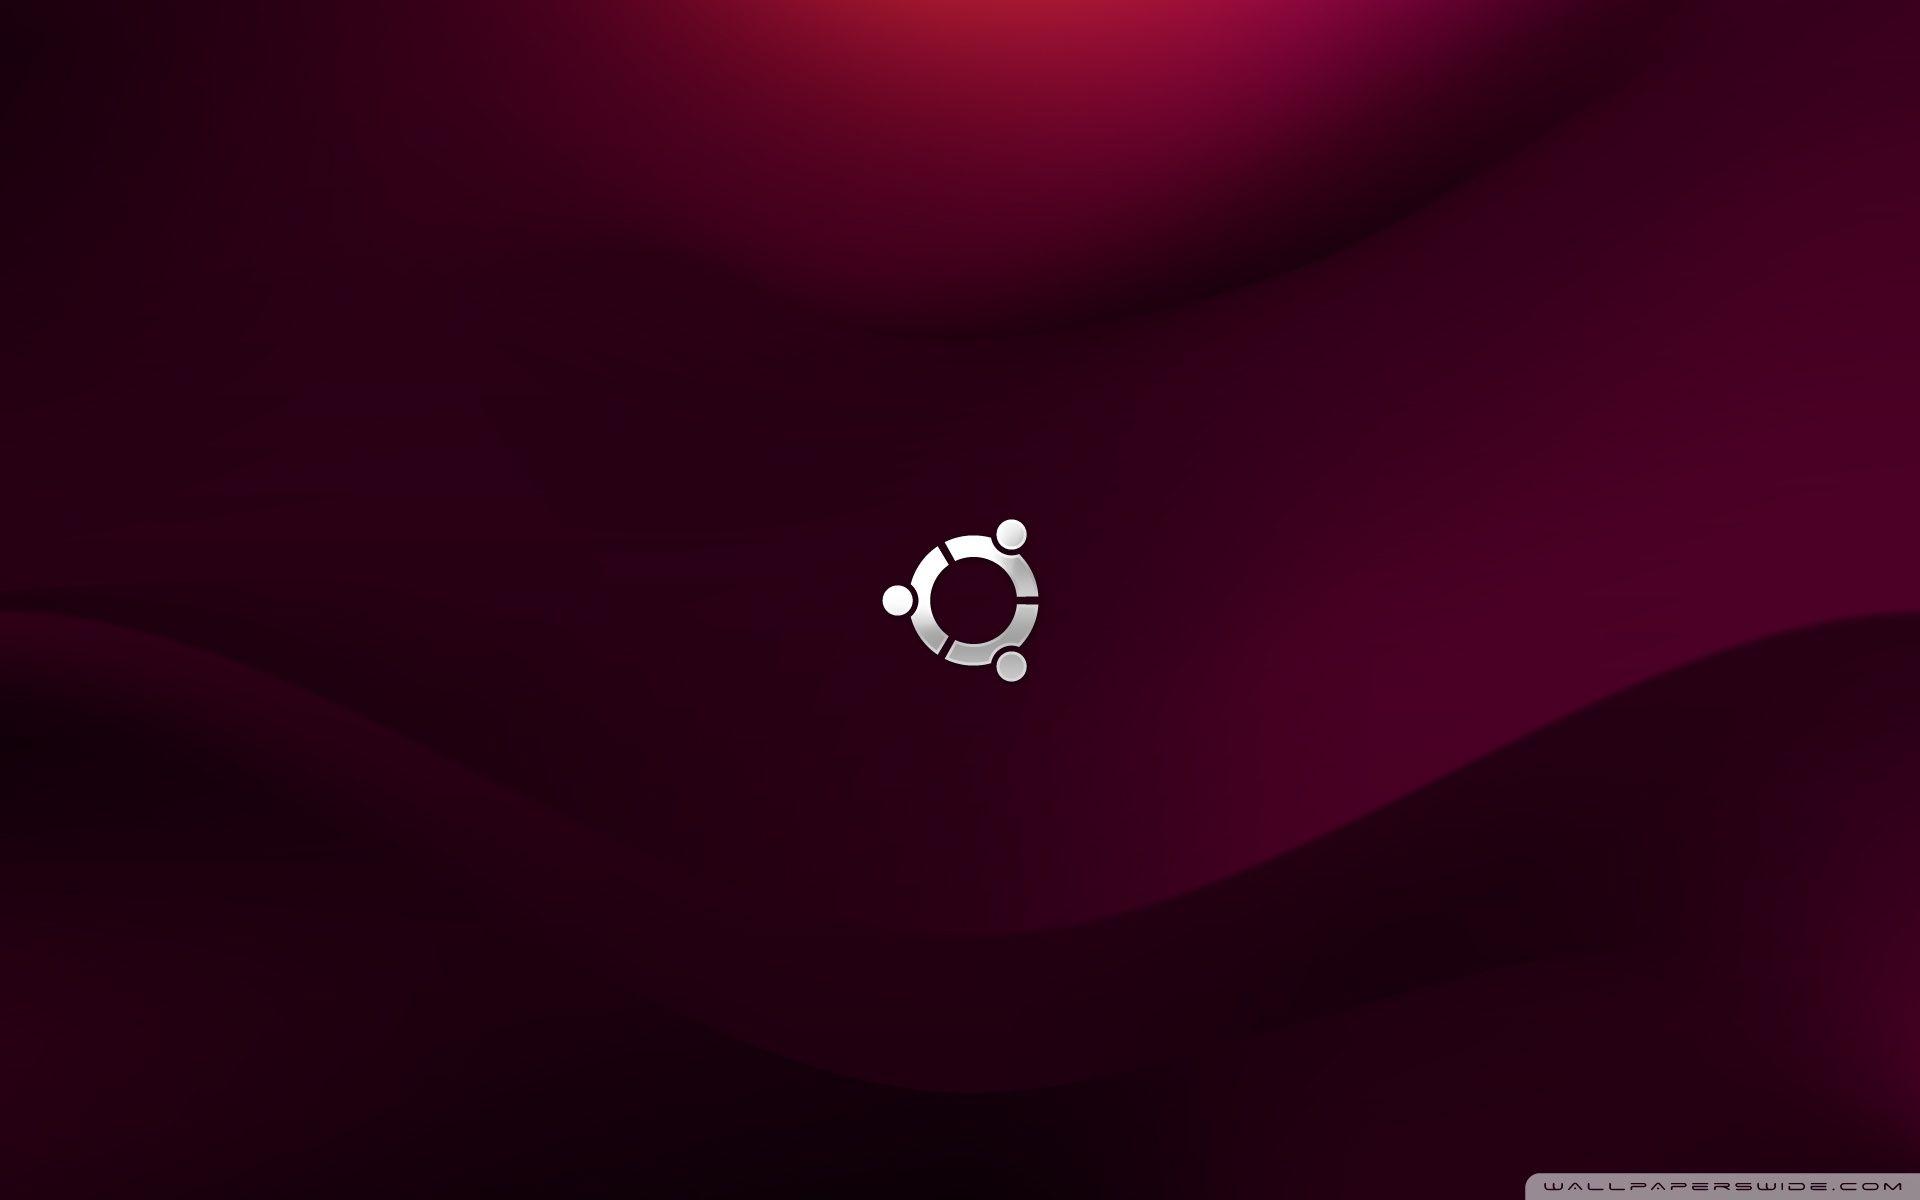 Ubuntu 4k Wallpapers Top Free Ubuntu 4k Backgrounds Wallpaperaccess